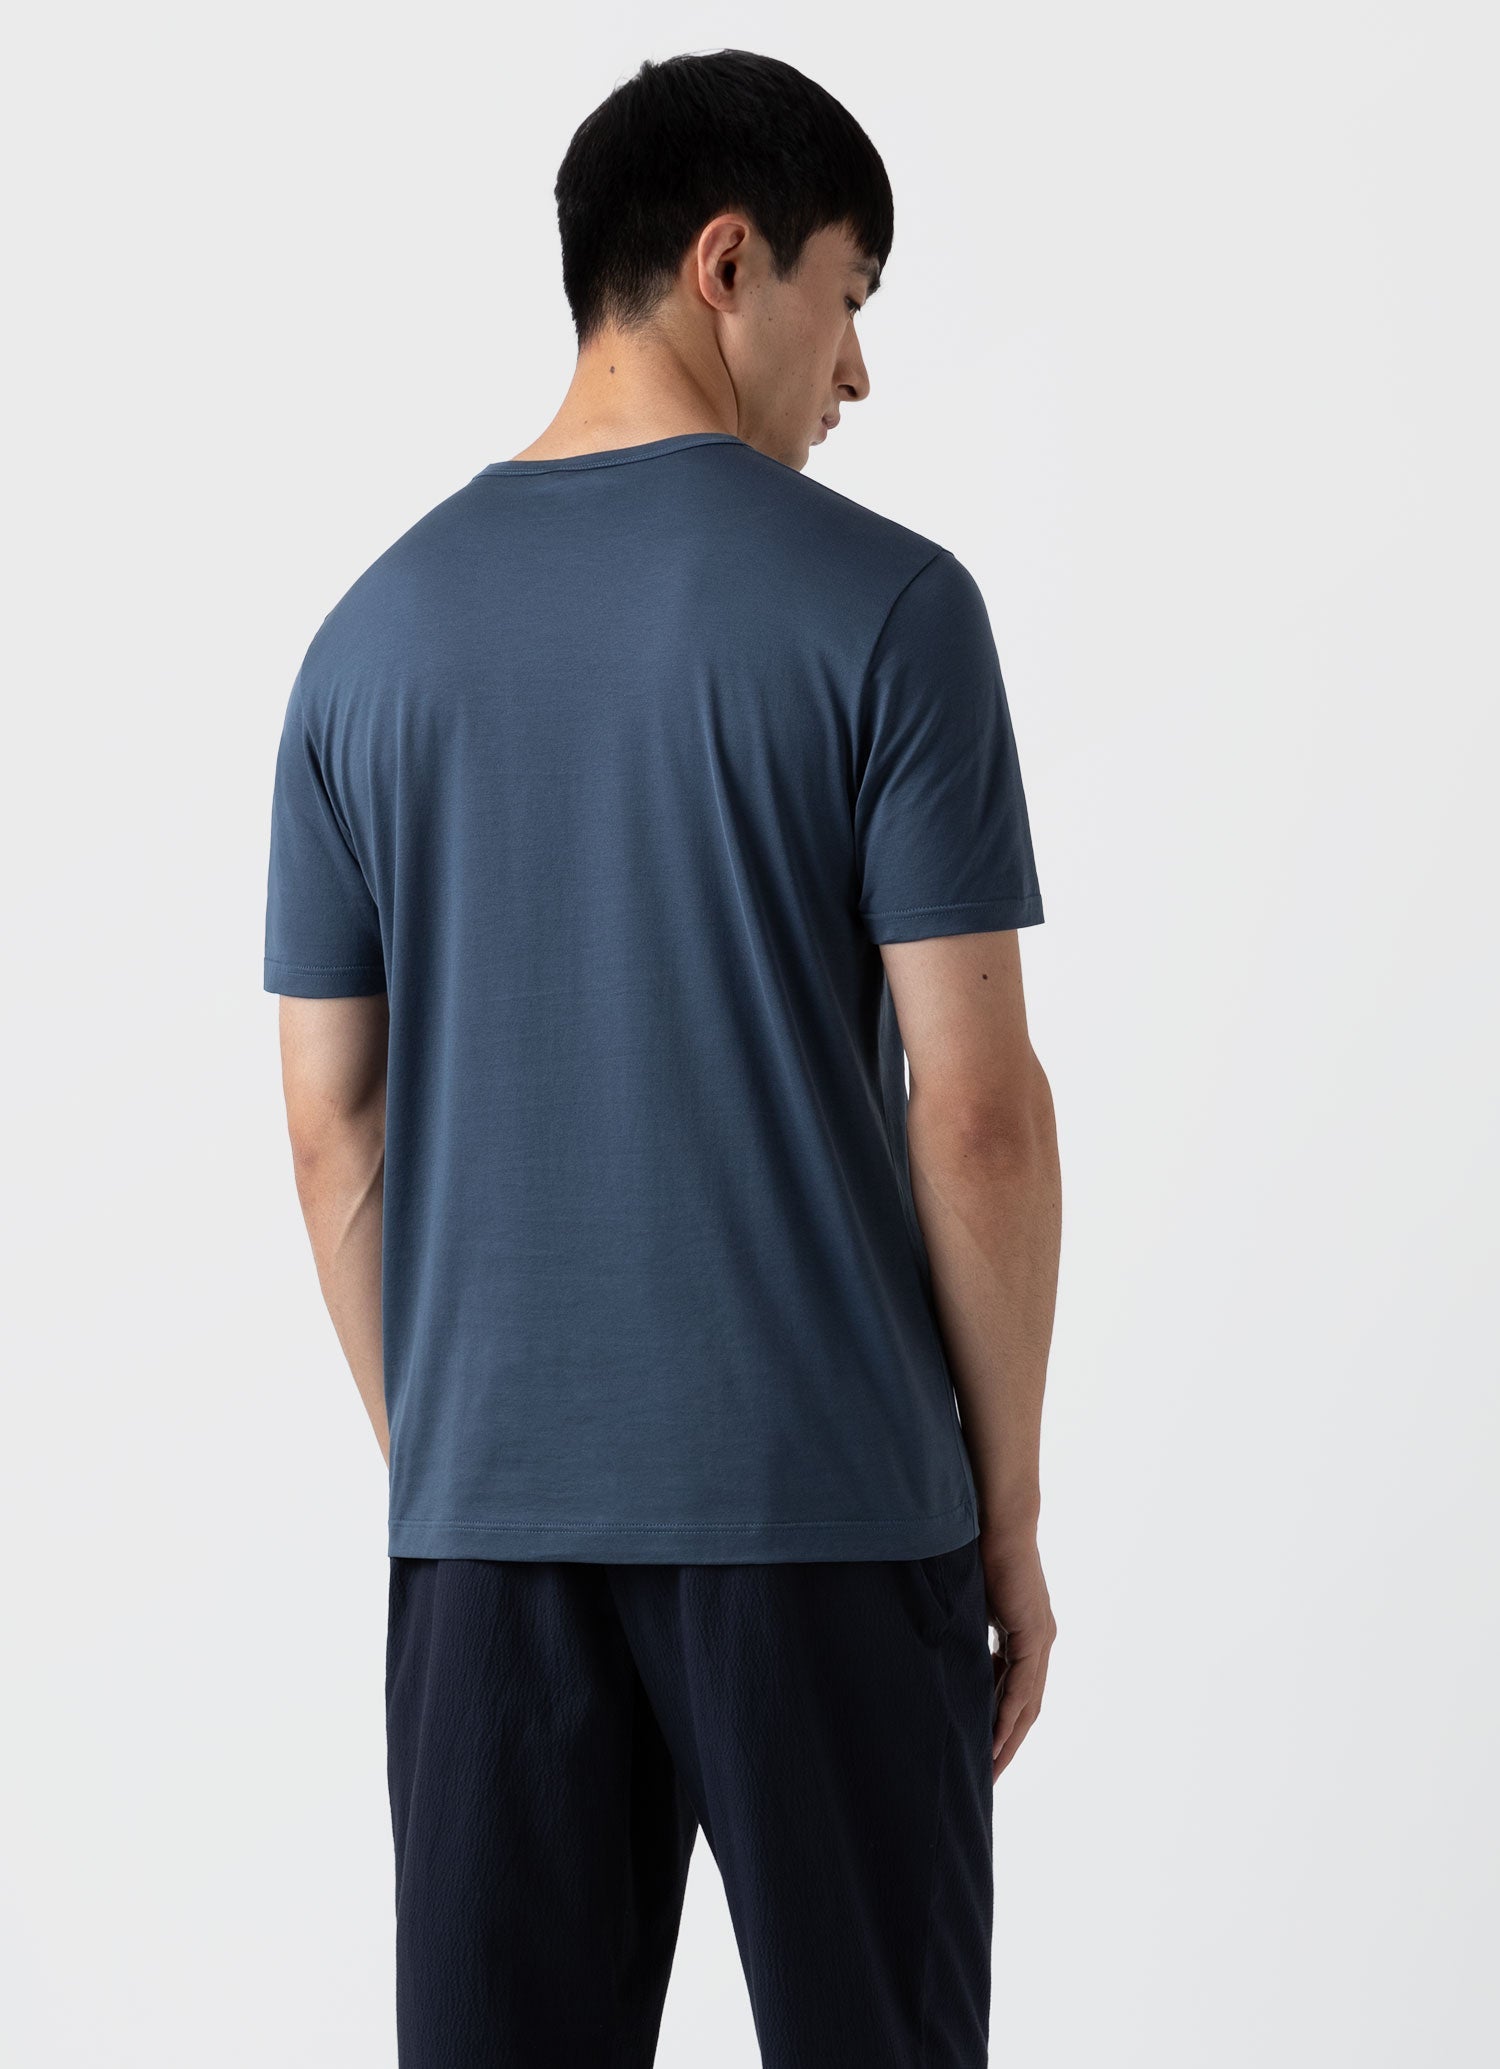 Men's Classic T-shirt in Shale Blue